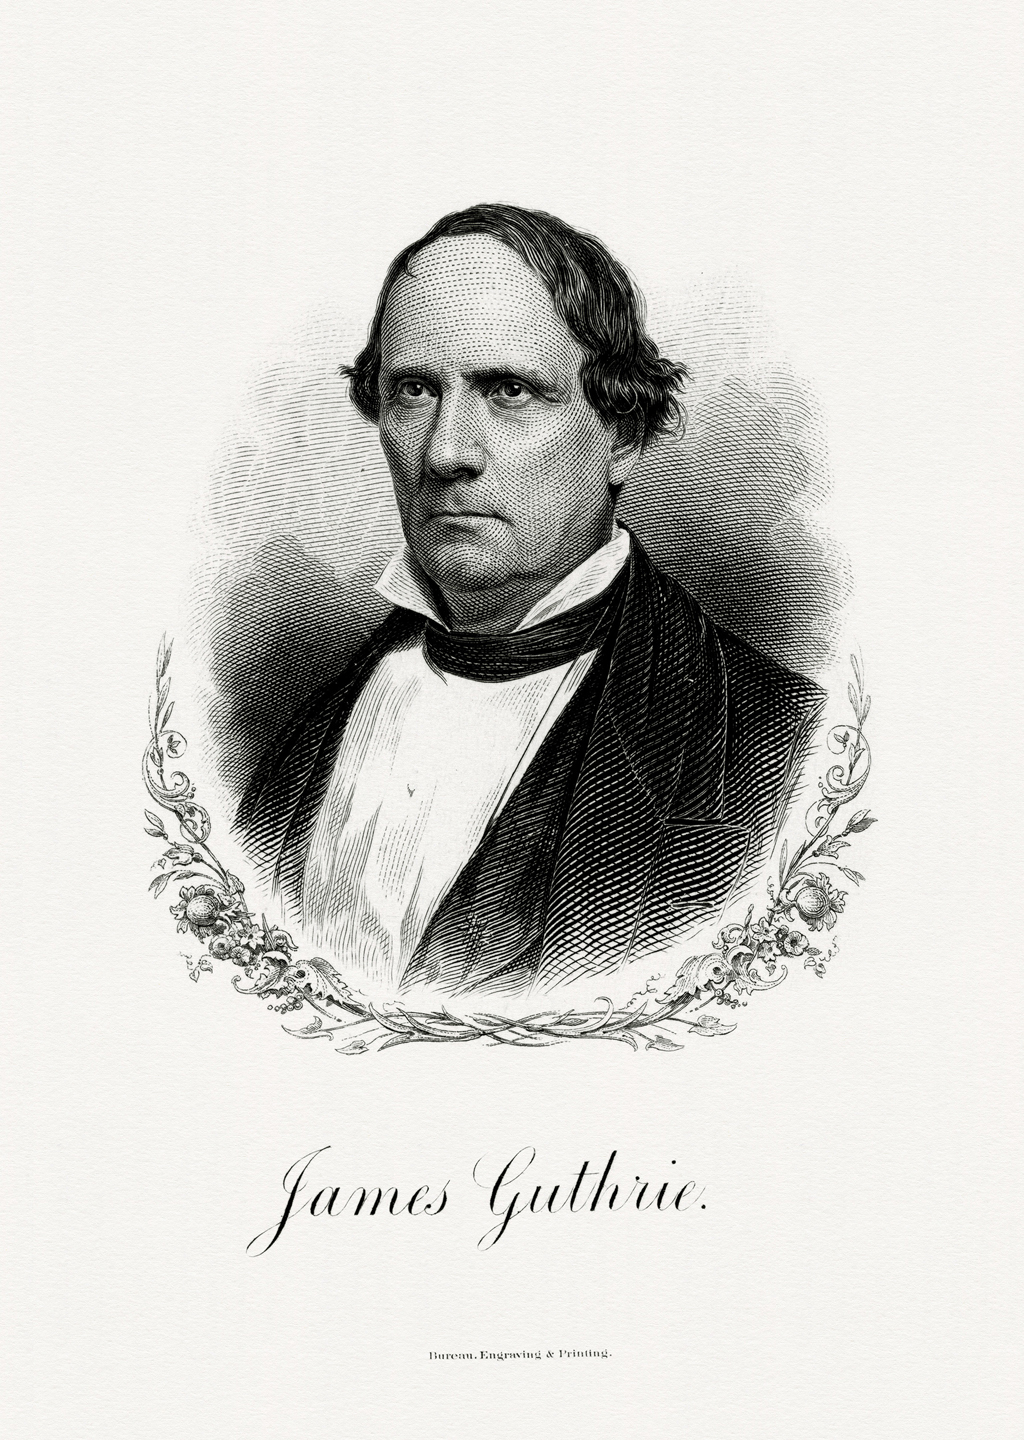 Portrait of James Guthrie, Secretary of the Treasury under President Franklin Pierce.